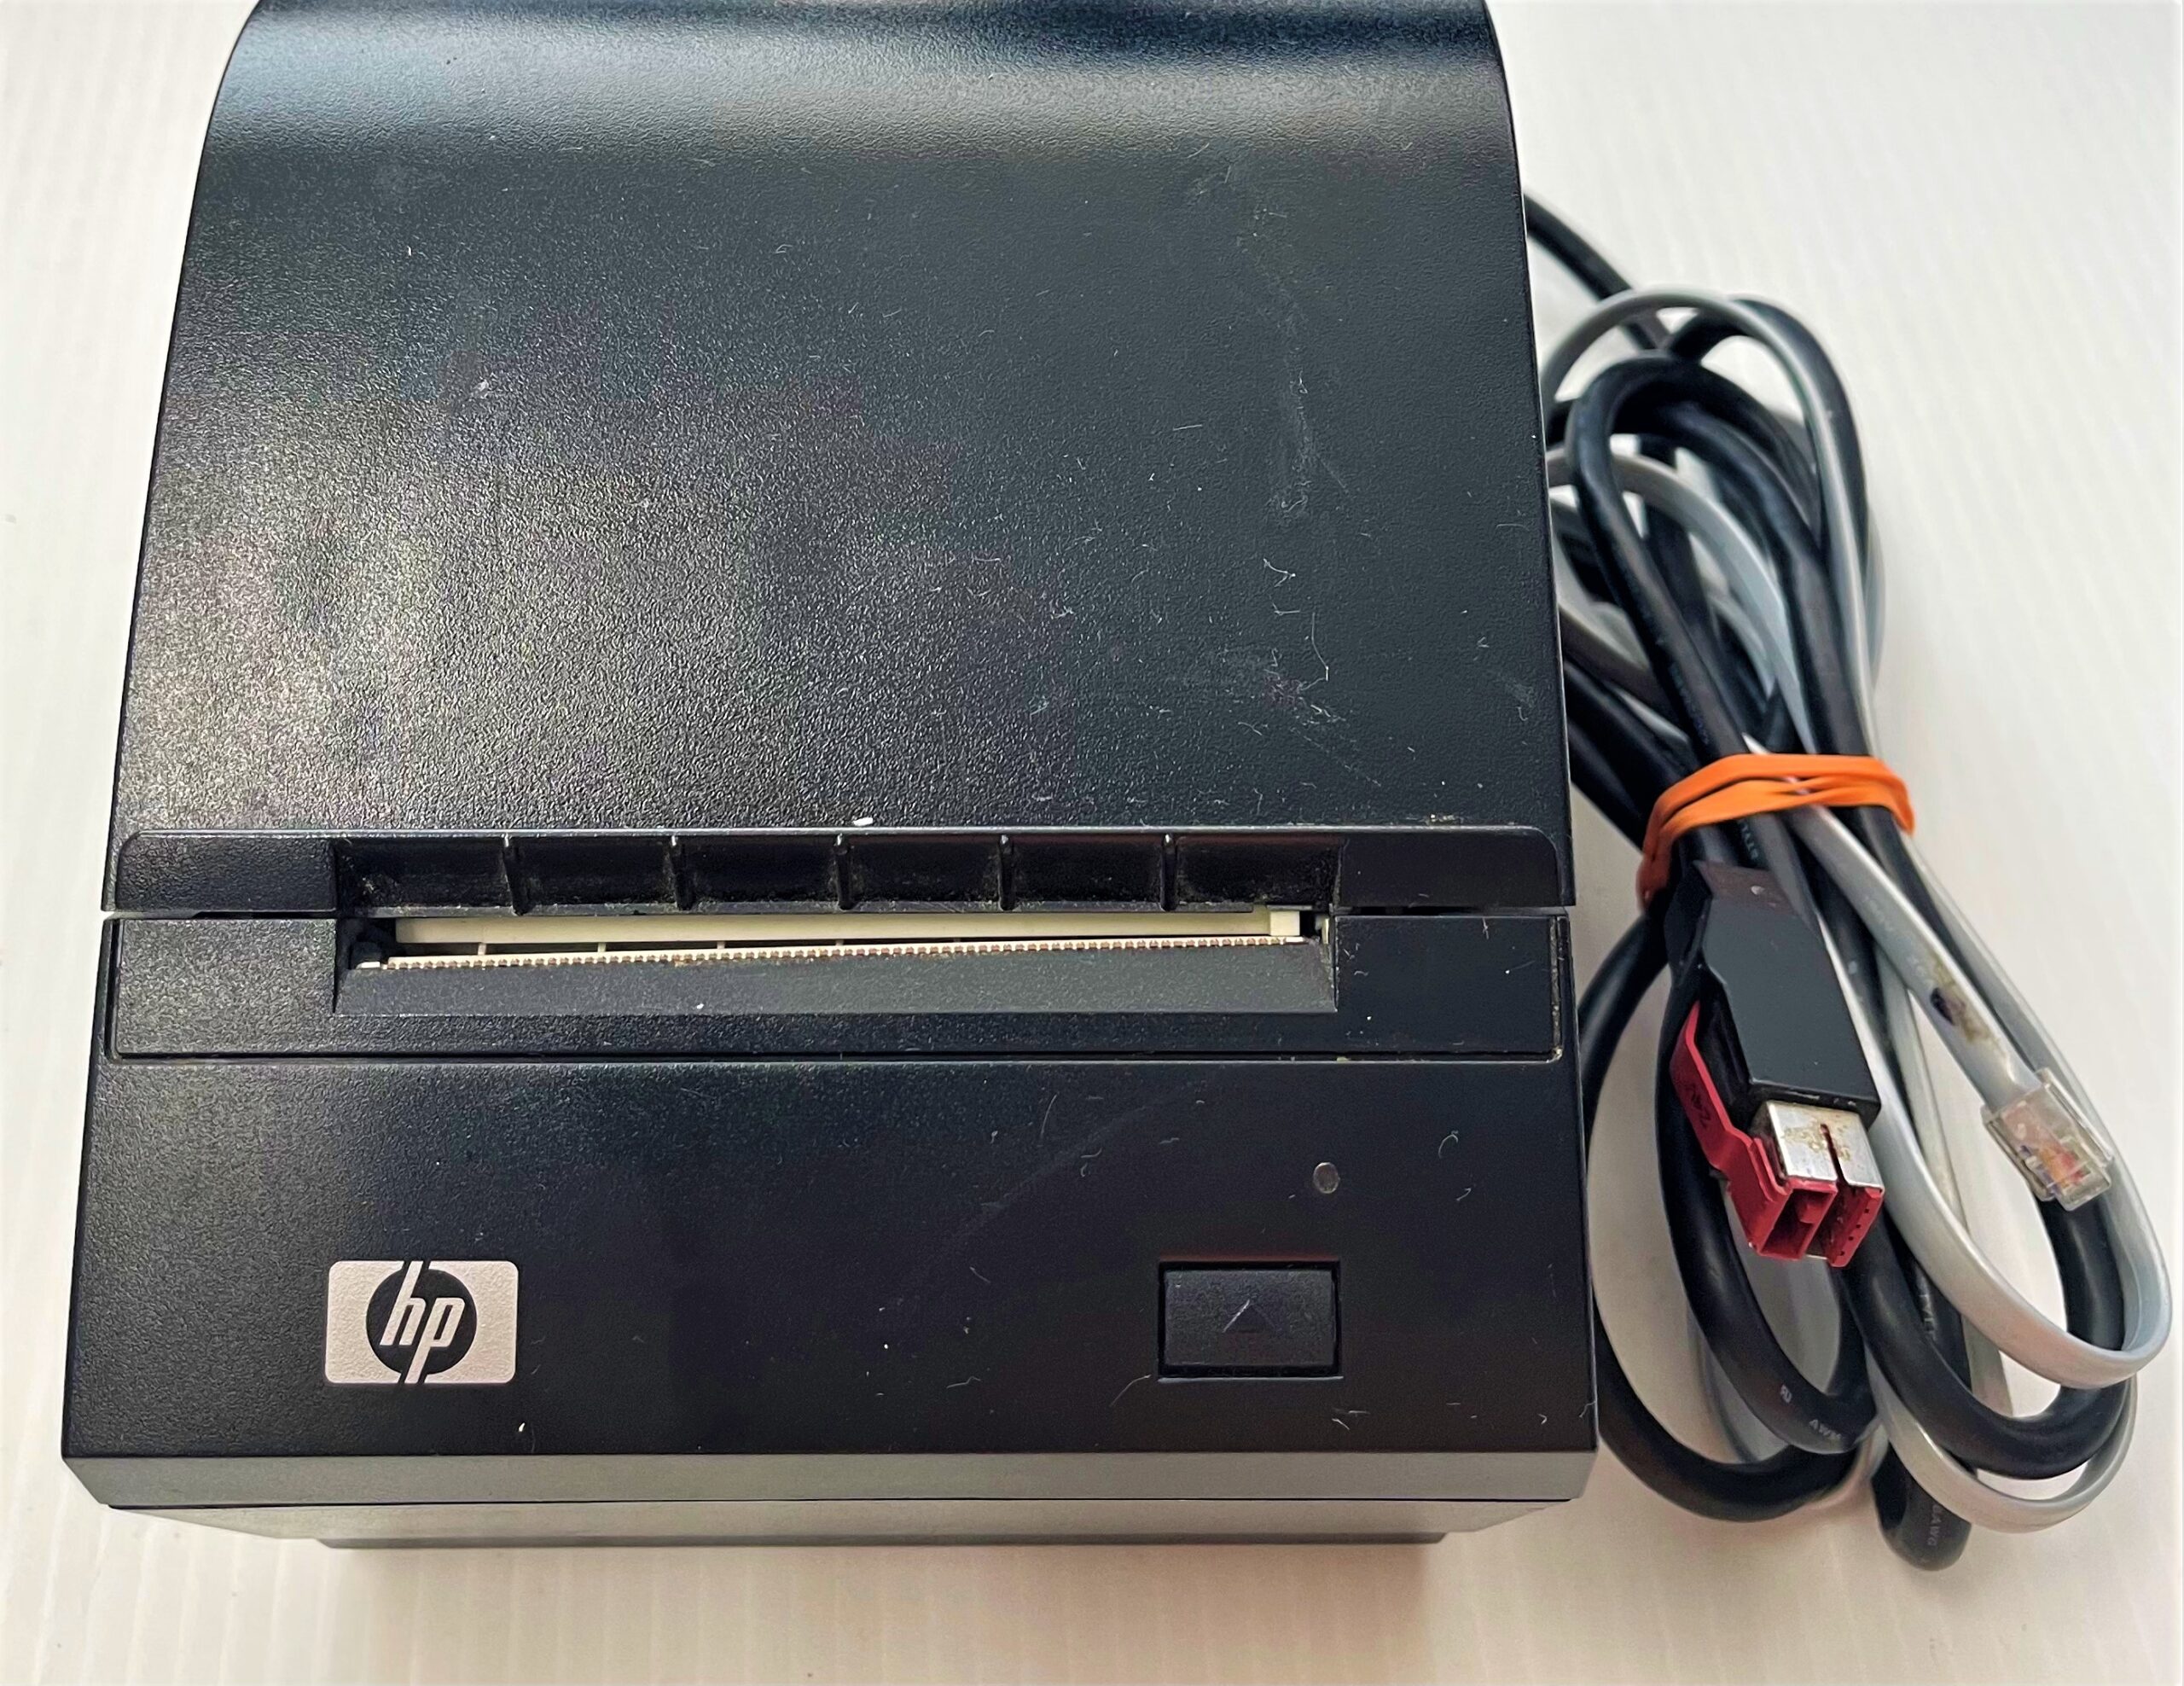 HP A794-2905-HW00 POS USB Thermal Receipt Printer